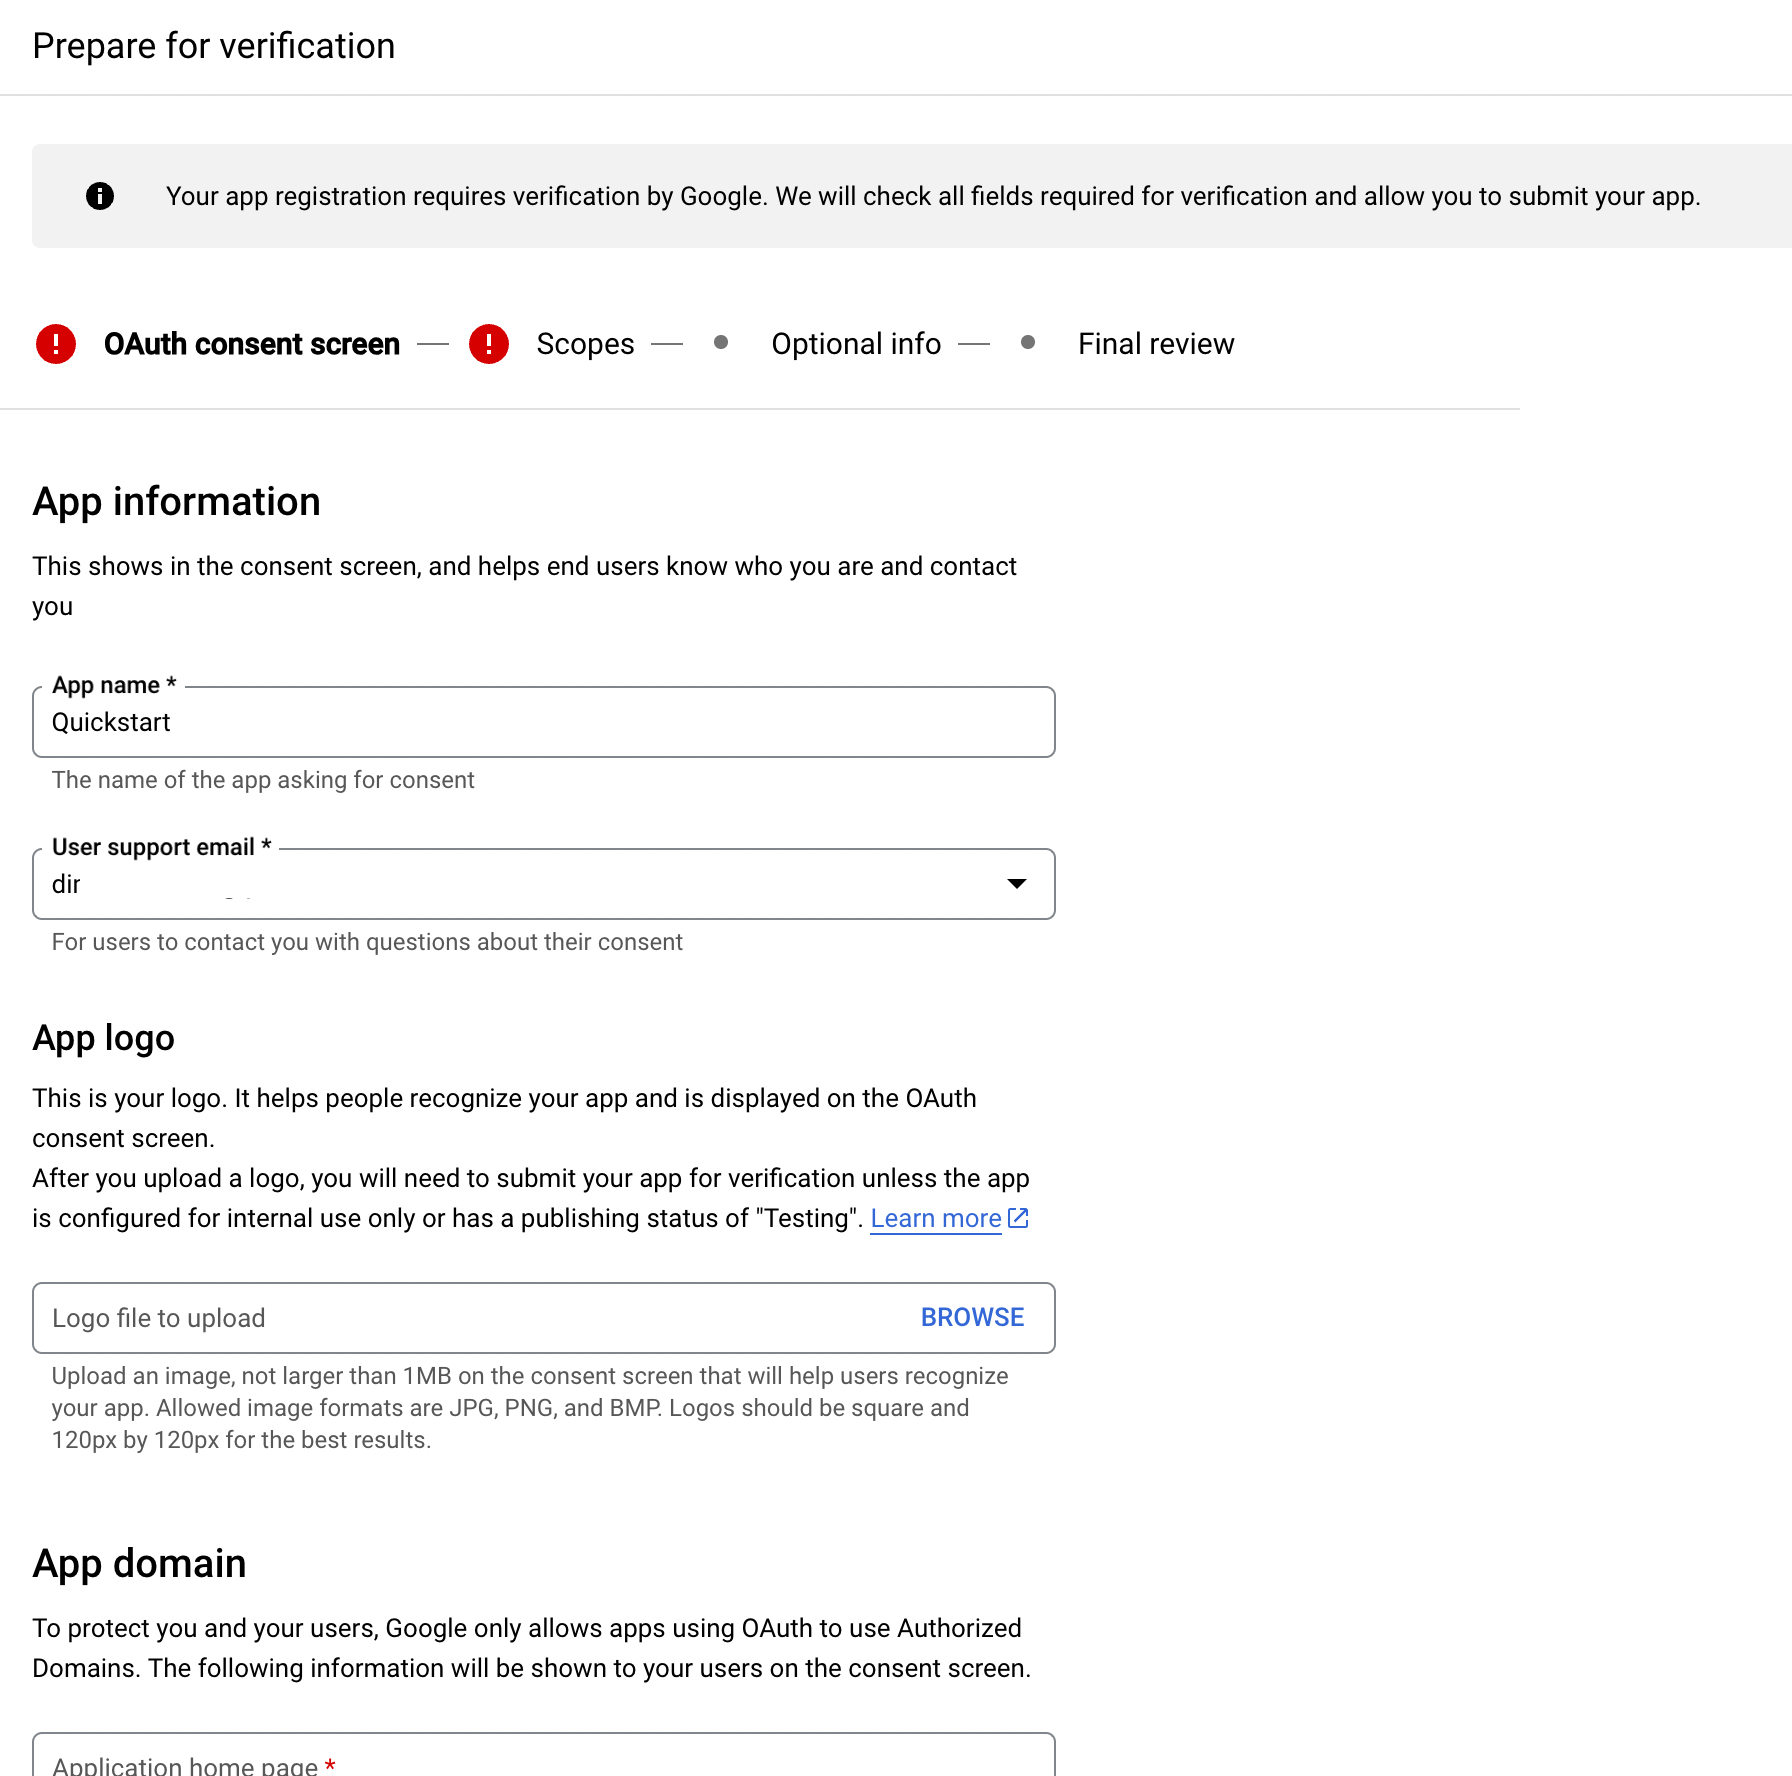 OAuth consent screen - Verification